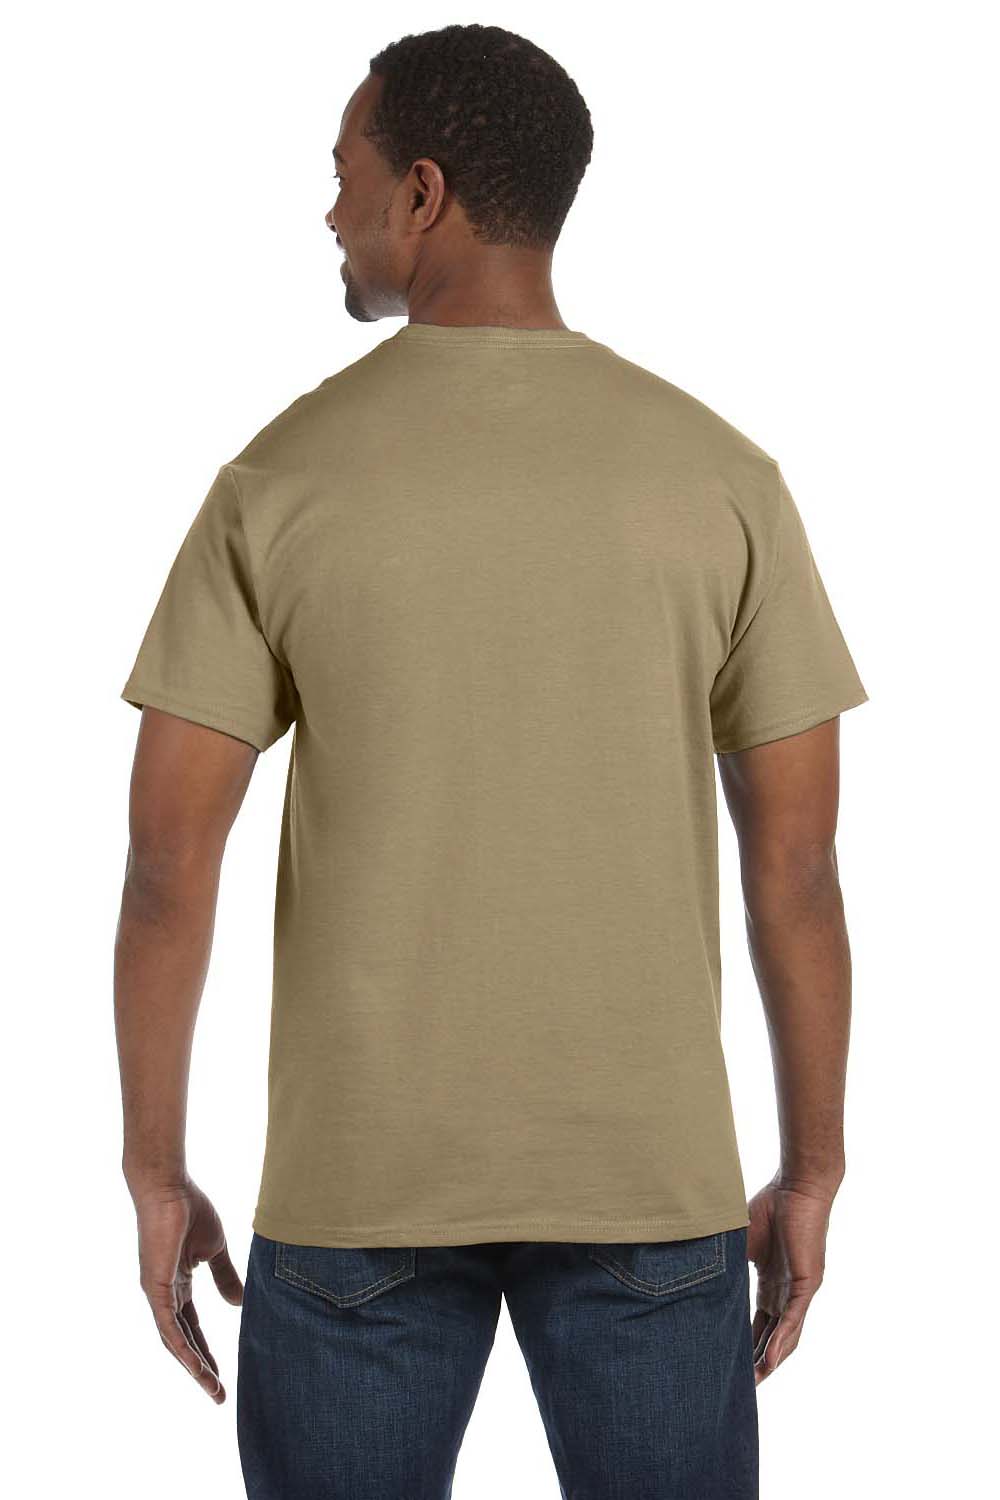 Jerzees 29M Mens Dri-Power Moisture Wicking Short Sleeve Crewneck T-Shirt Khaki Brown Back